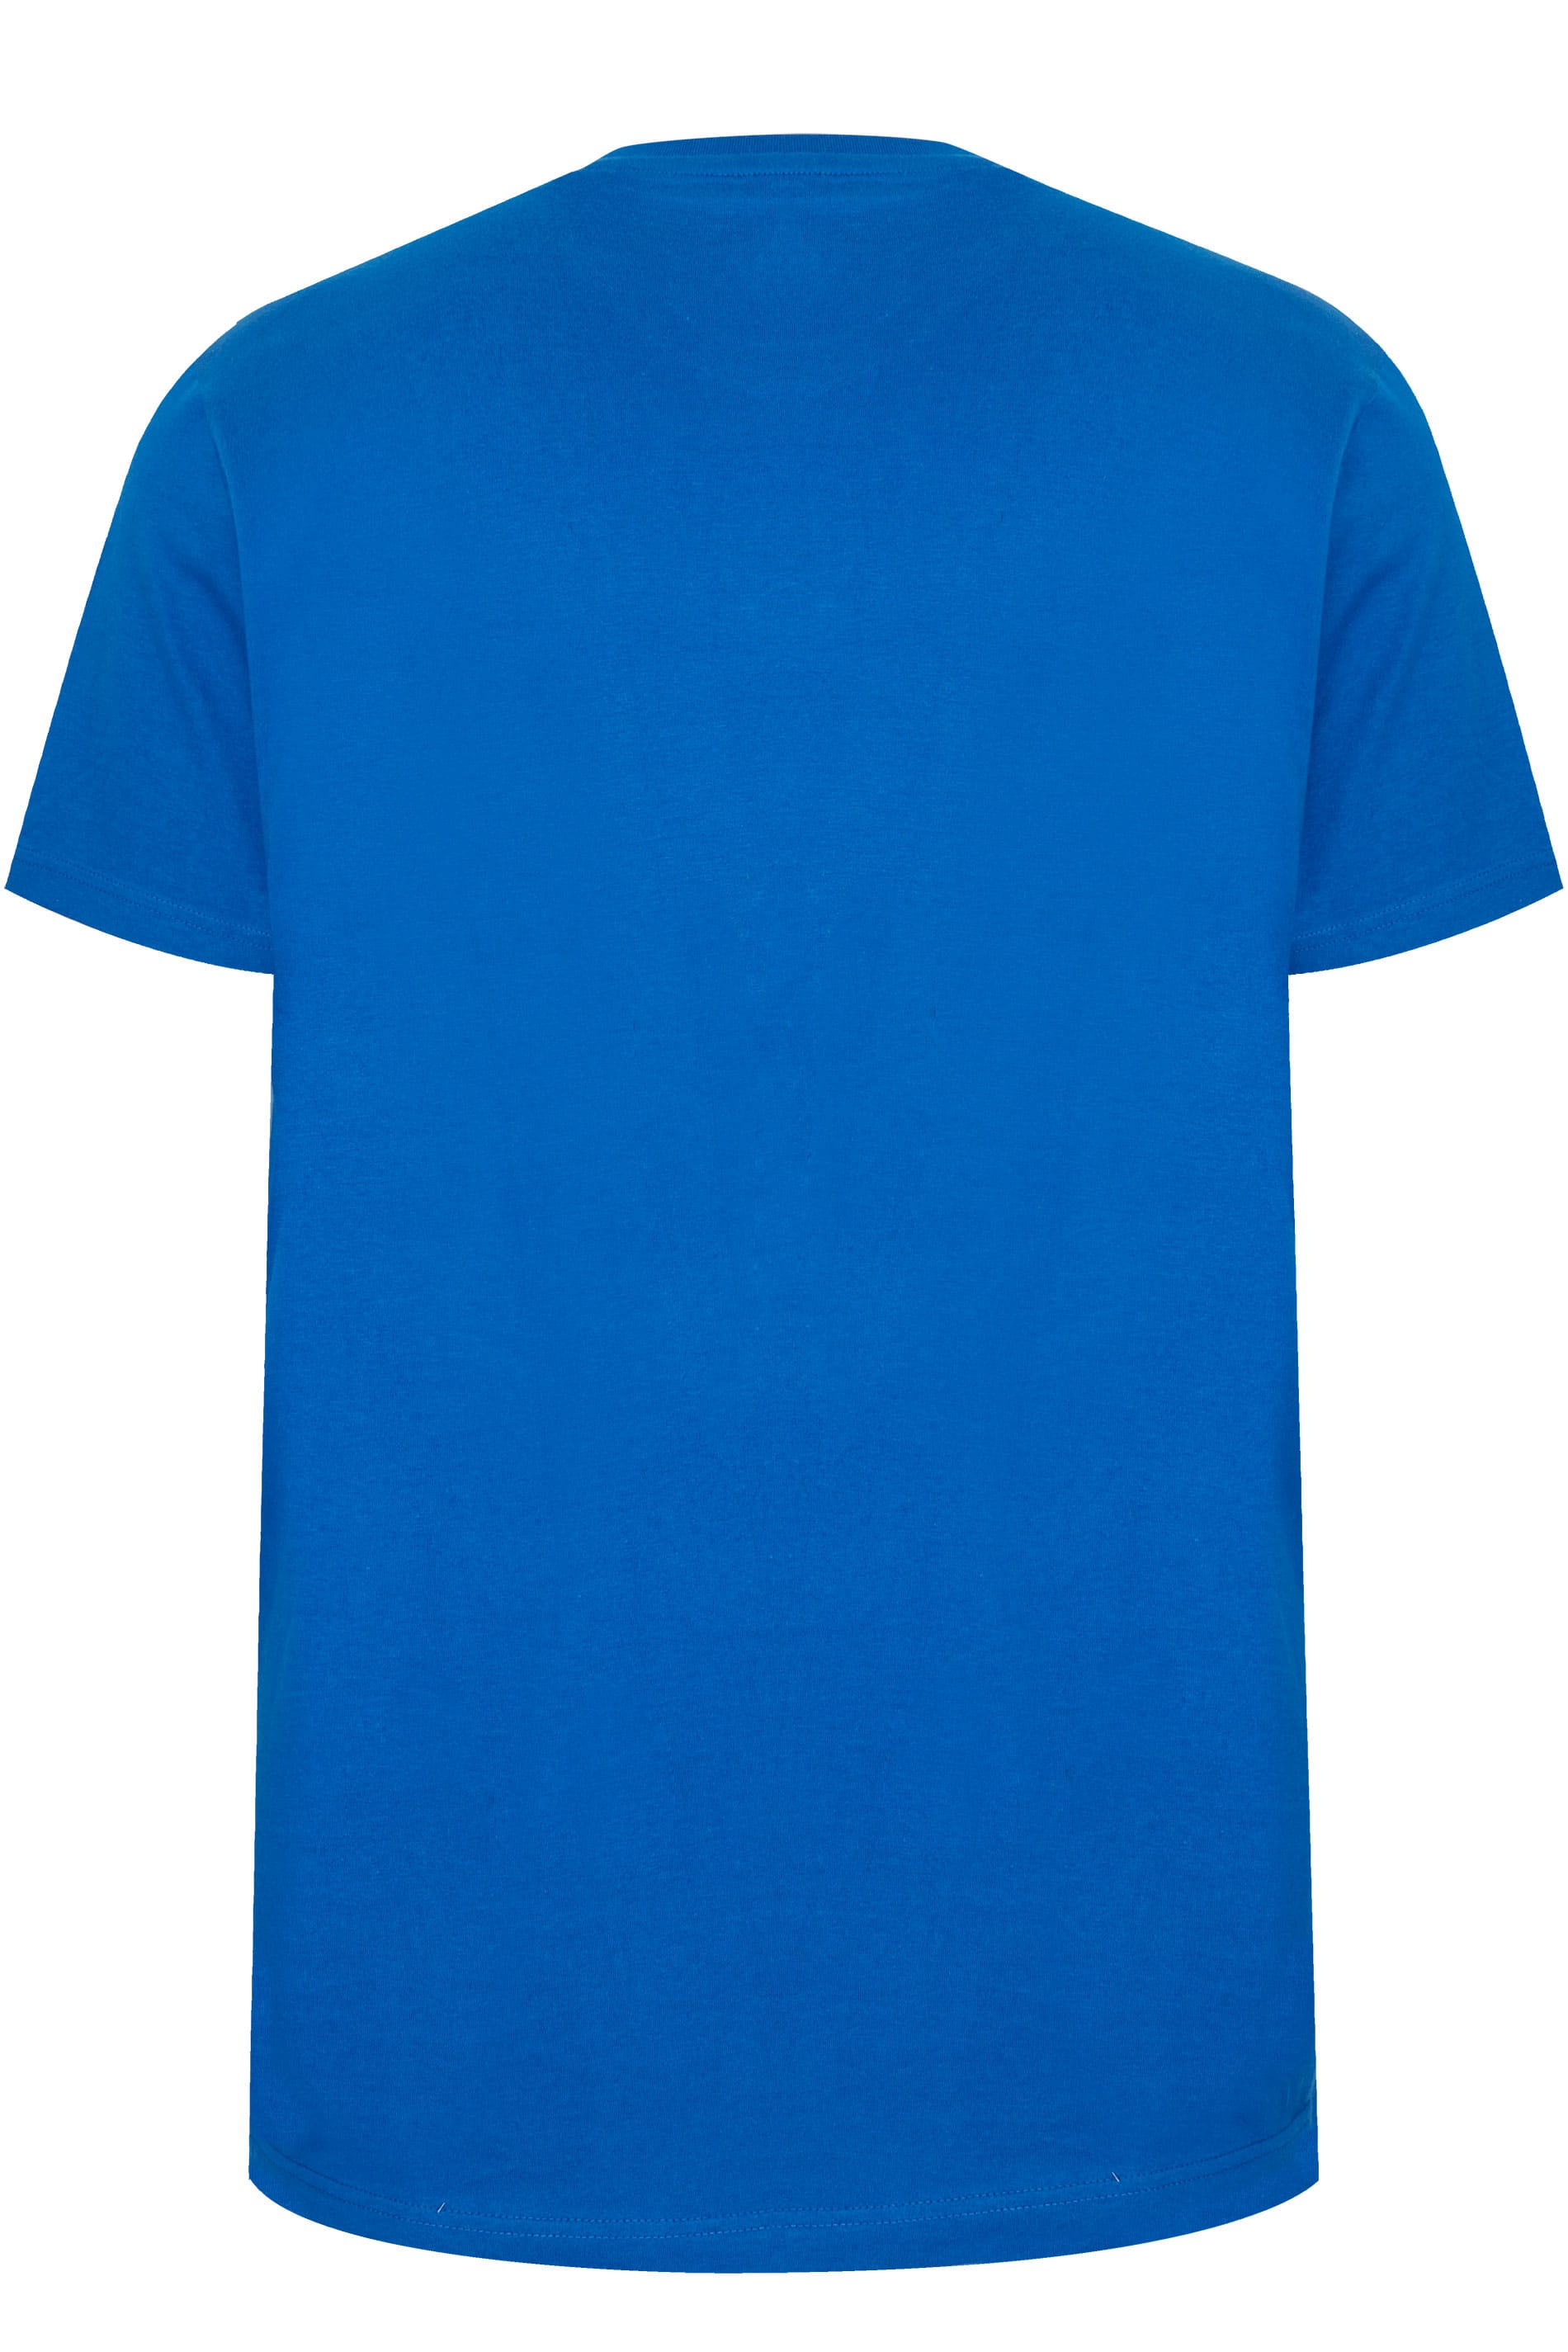 BadRhino Cobalt Blue Taped T-Shirt | Sizes M to 8XL | BadRhino